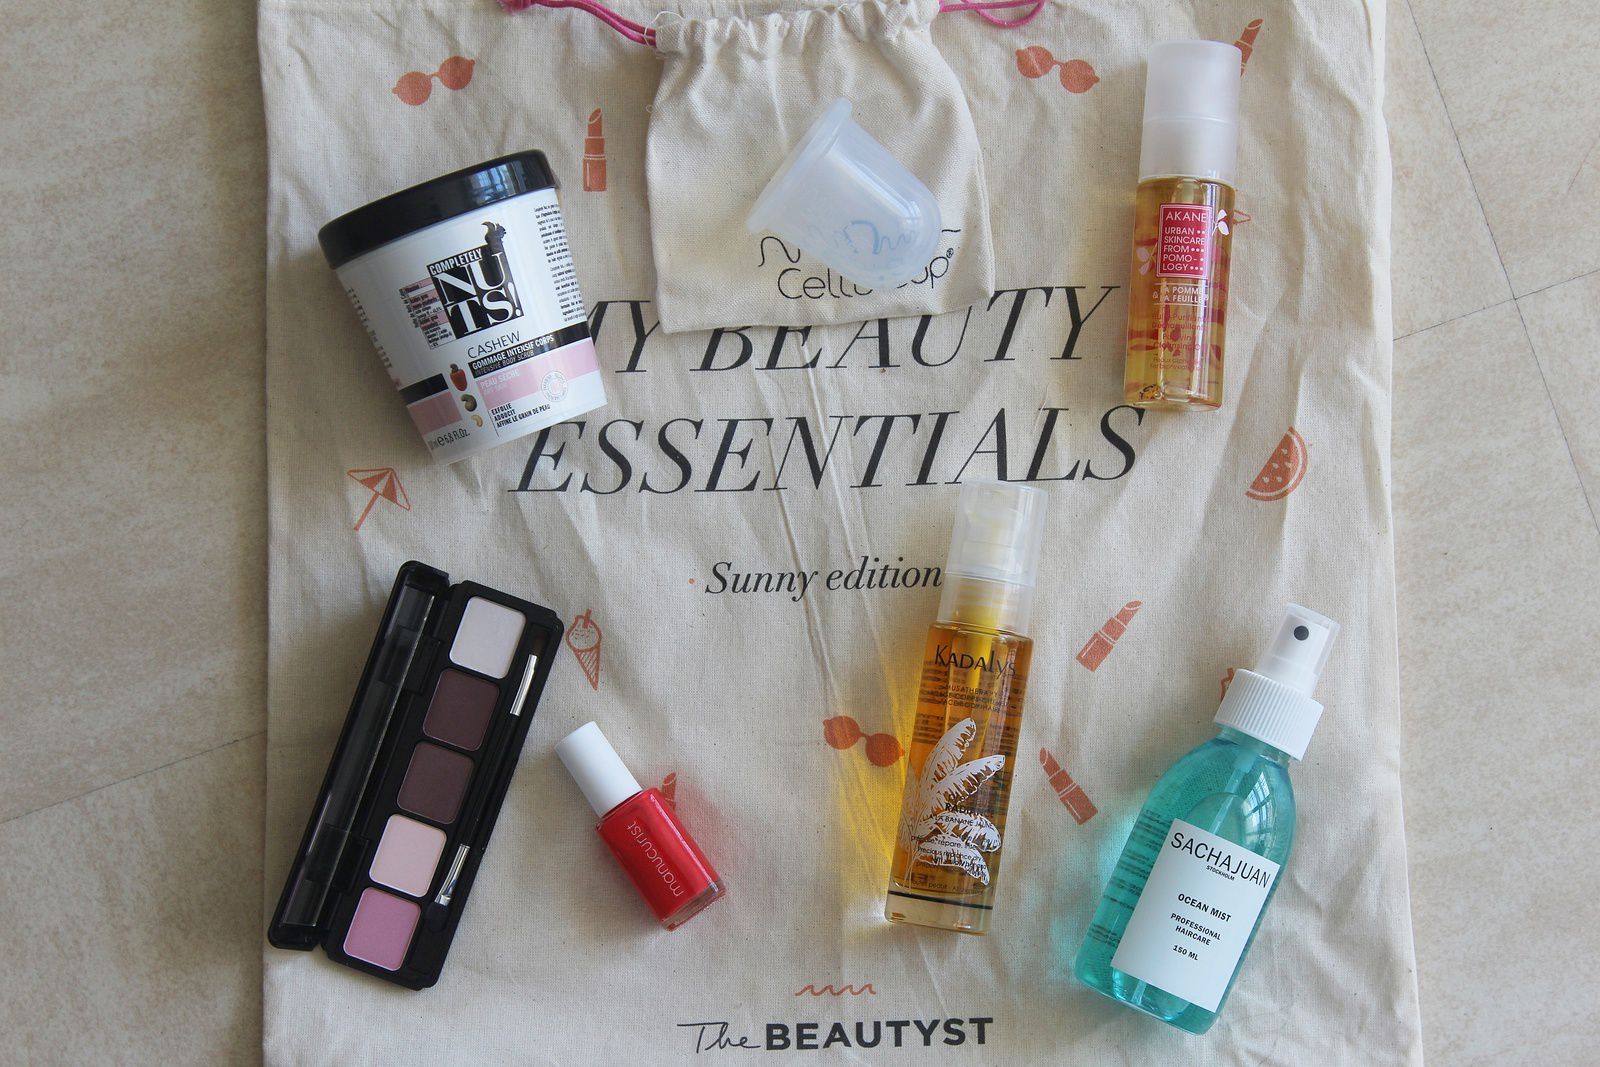 My Beauty Essentials, Sunny edition par Thebeautyst